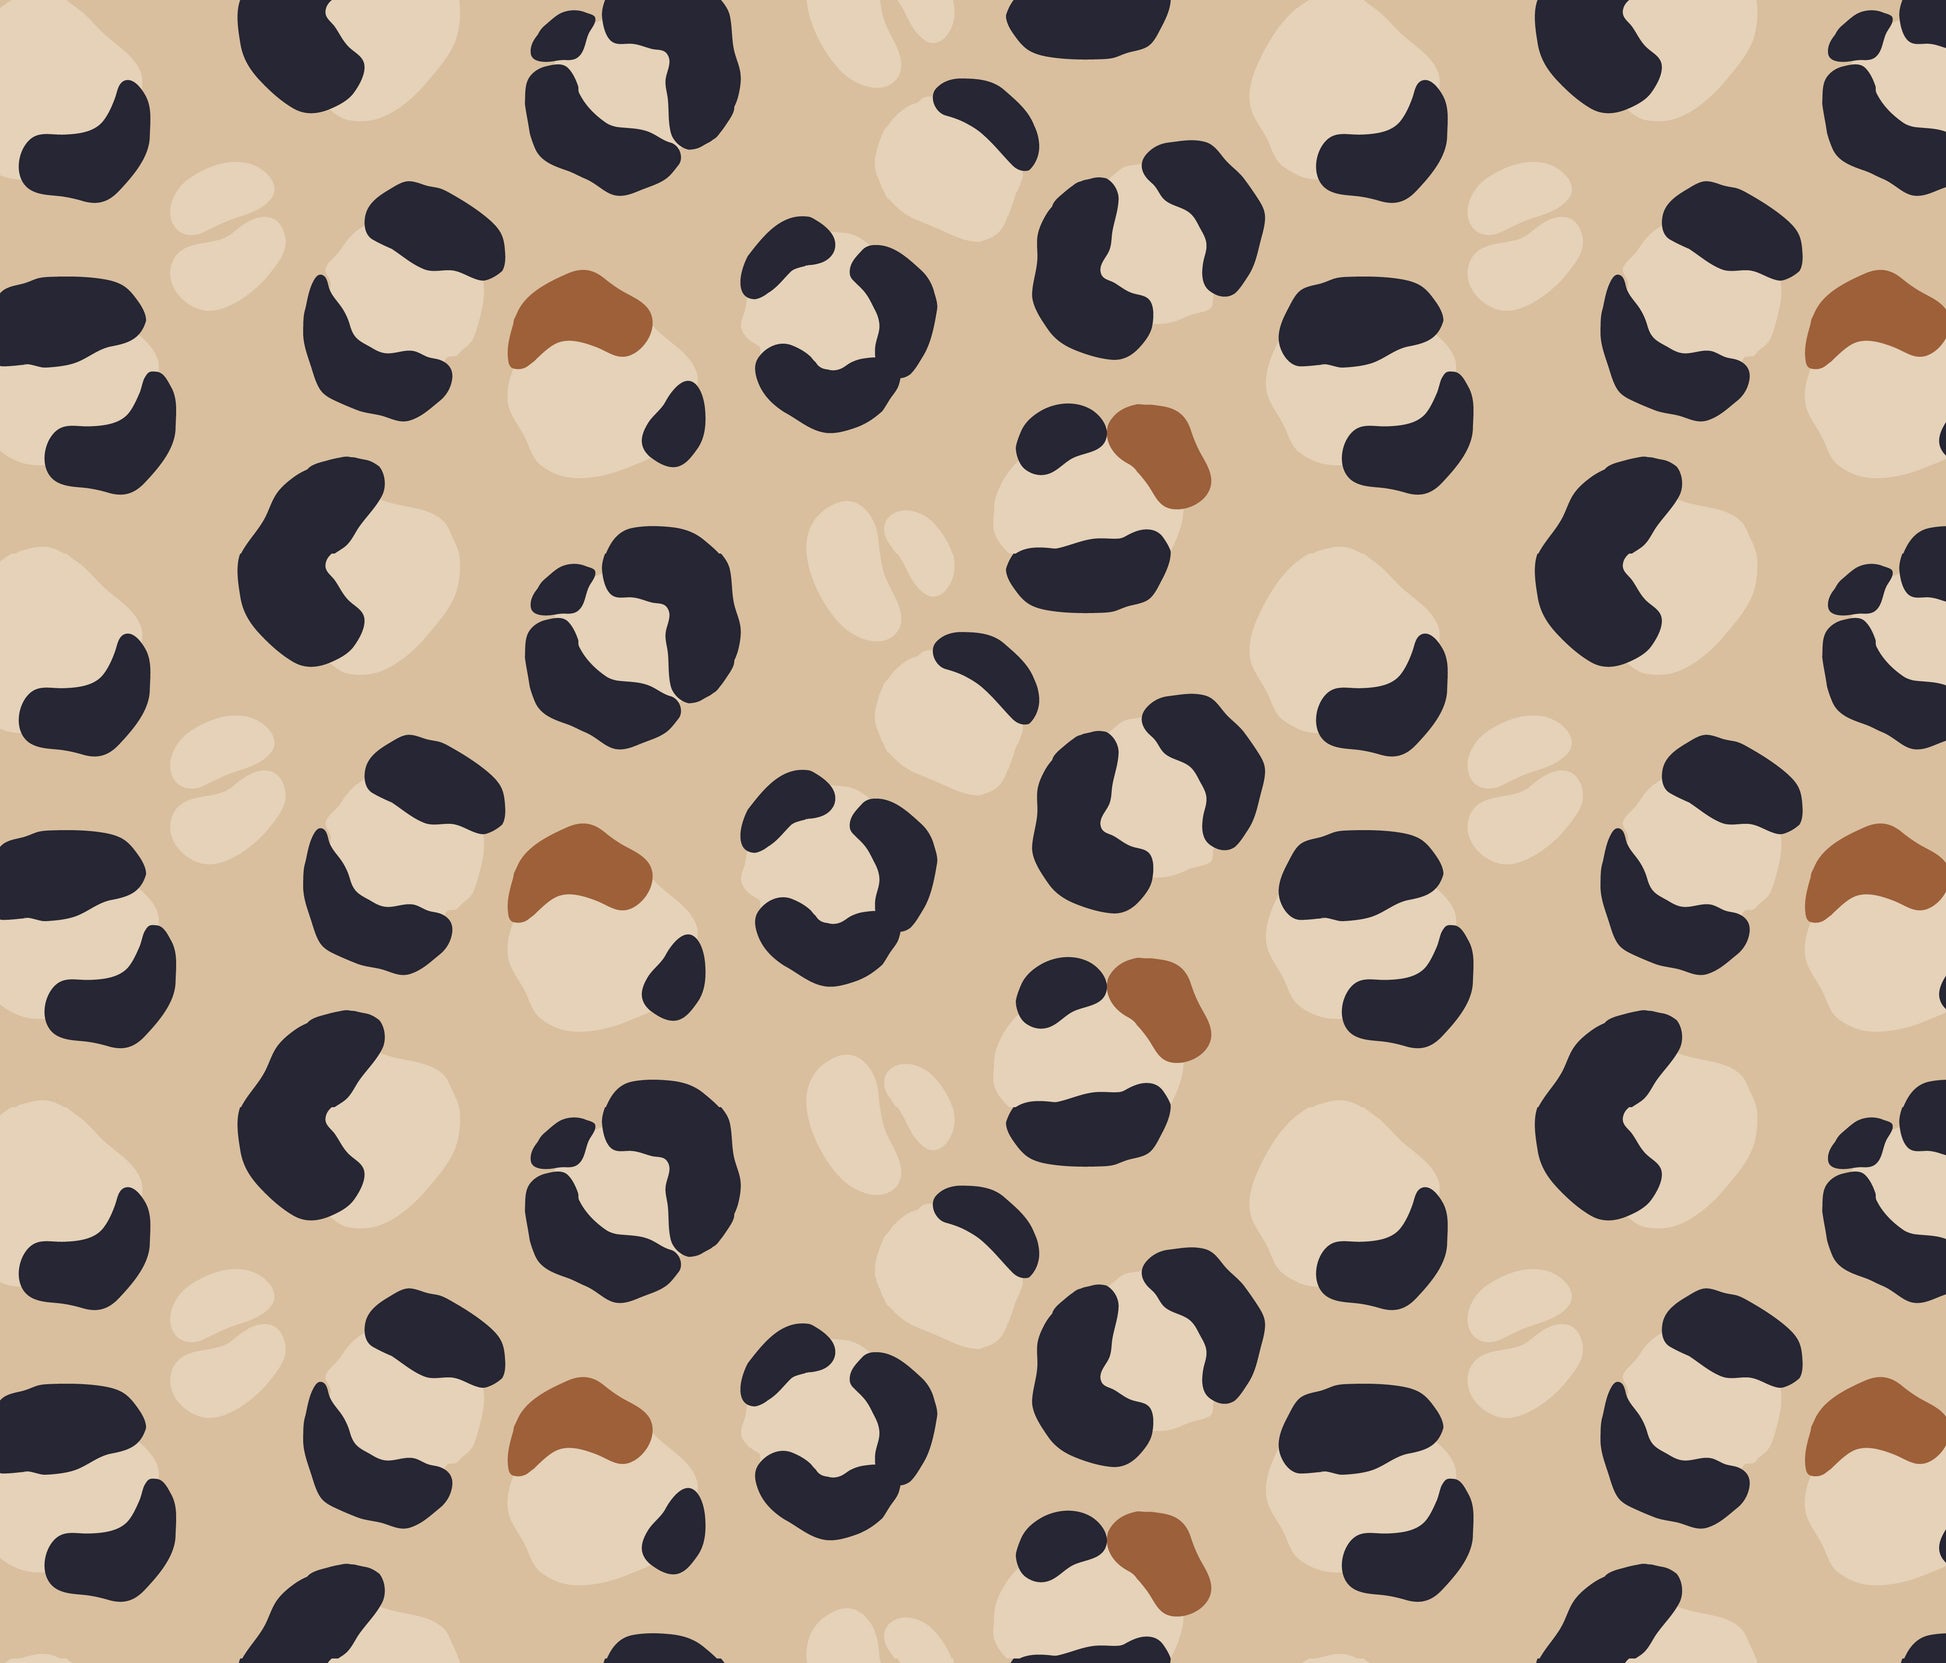 Leopard Print Wallpaper